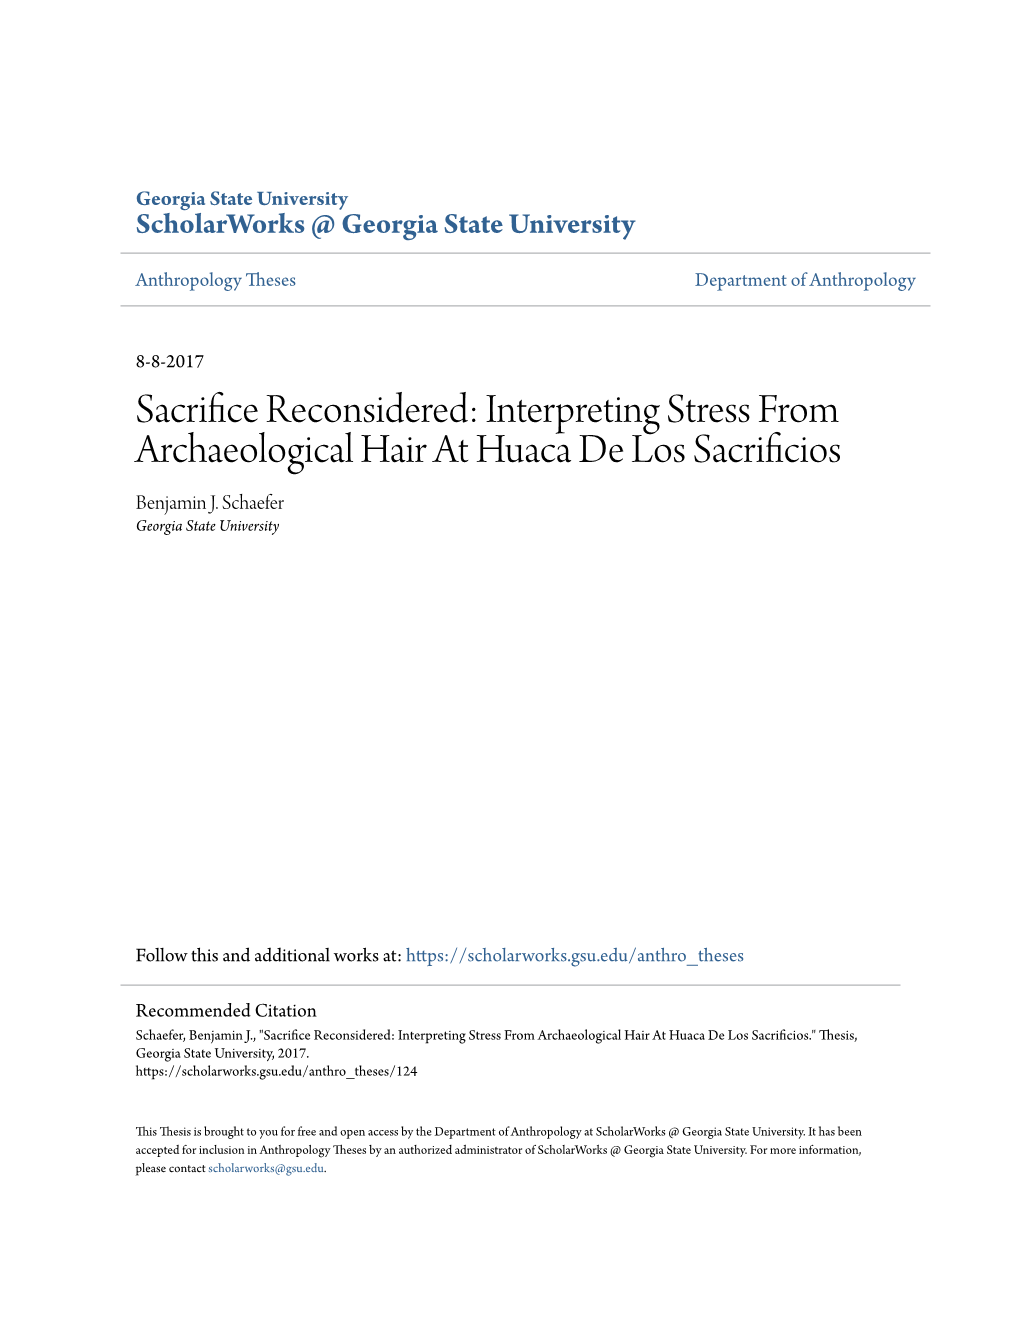 Sacrifice Reconsidered: Interpreting Stress from Archaeological Hair at Huaca De Los Sacrificios Benjamin J